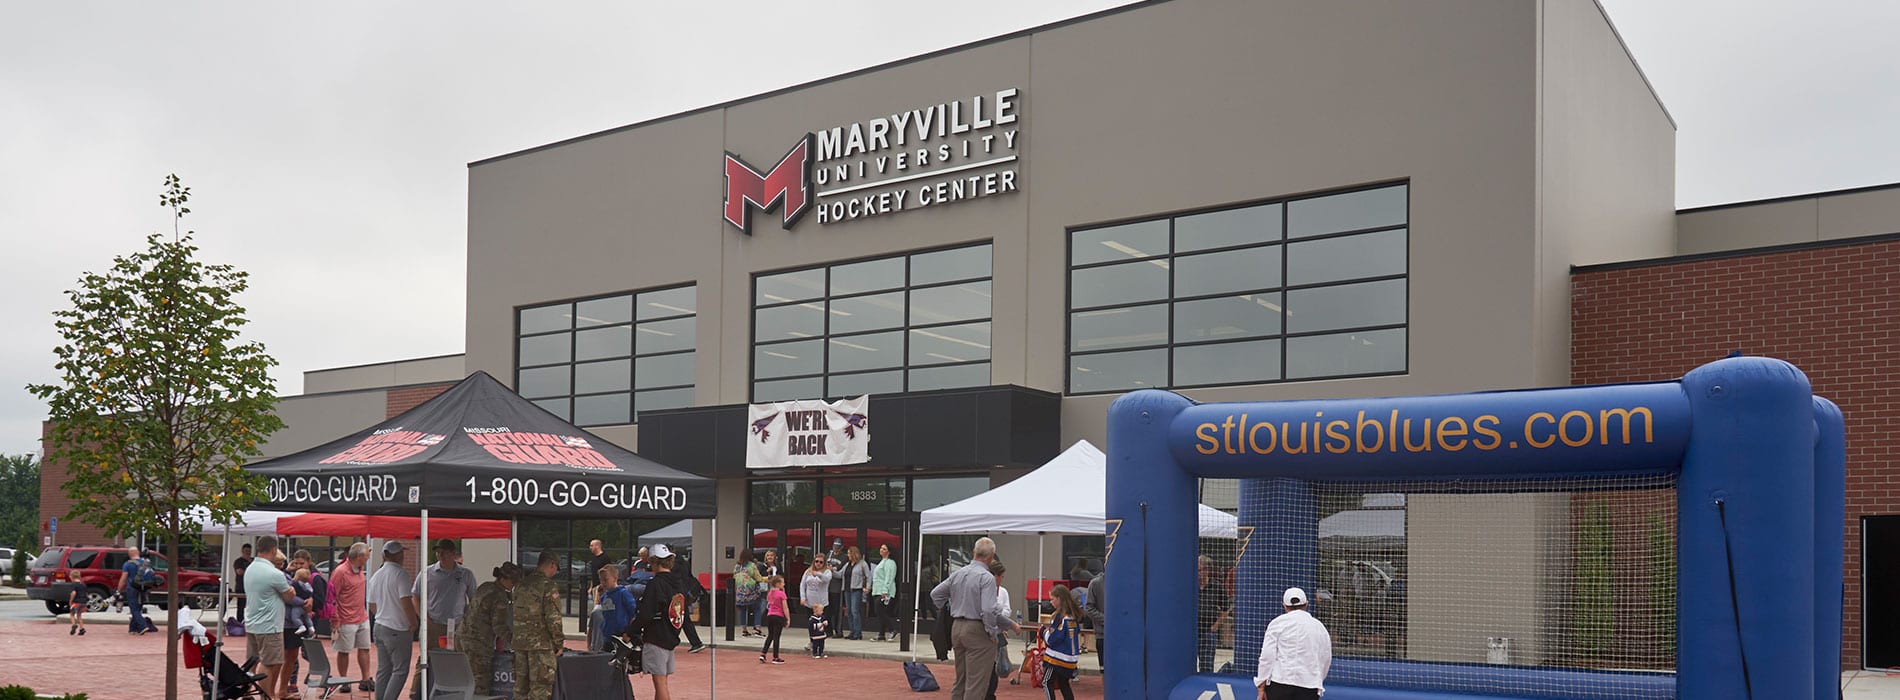 entrance to maryville ice hockey center